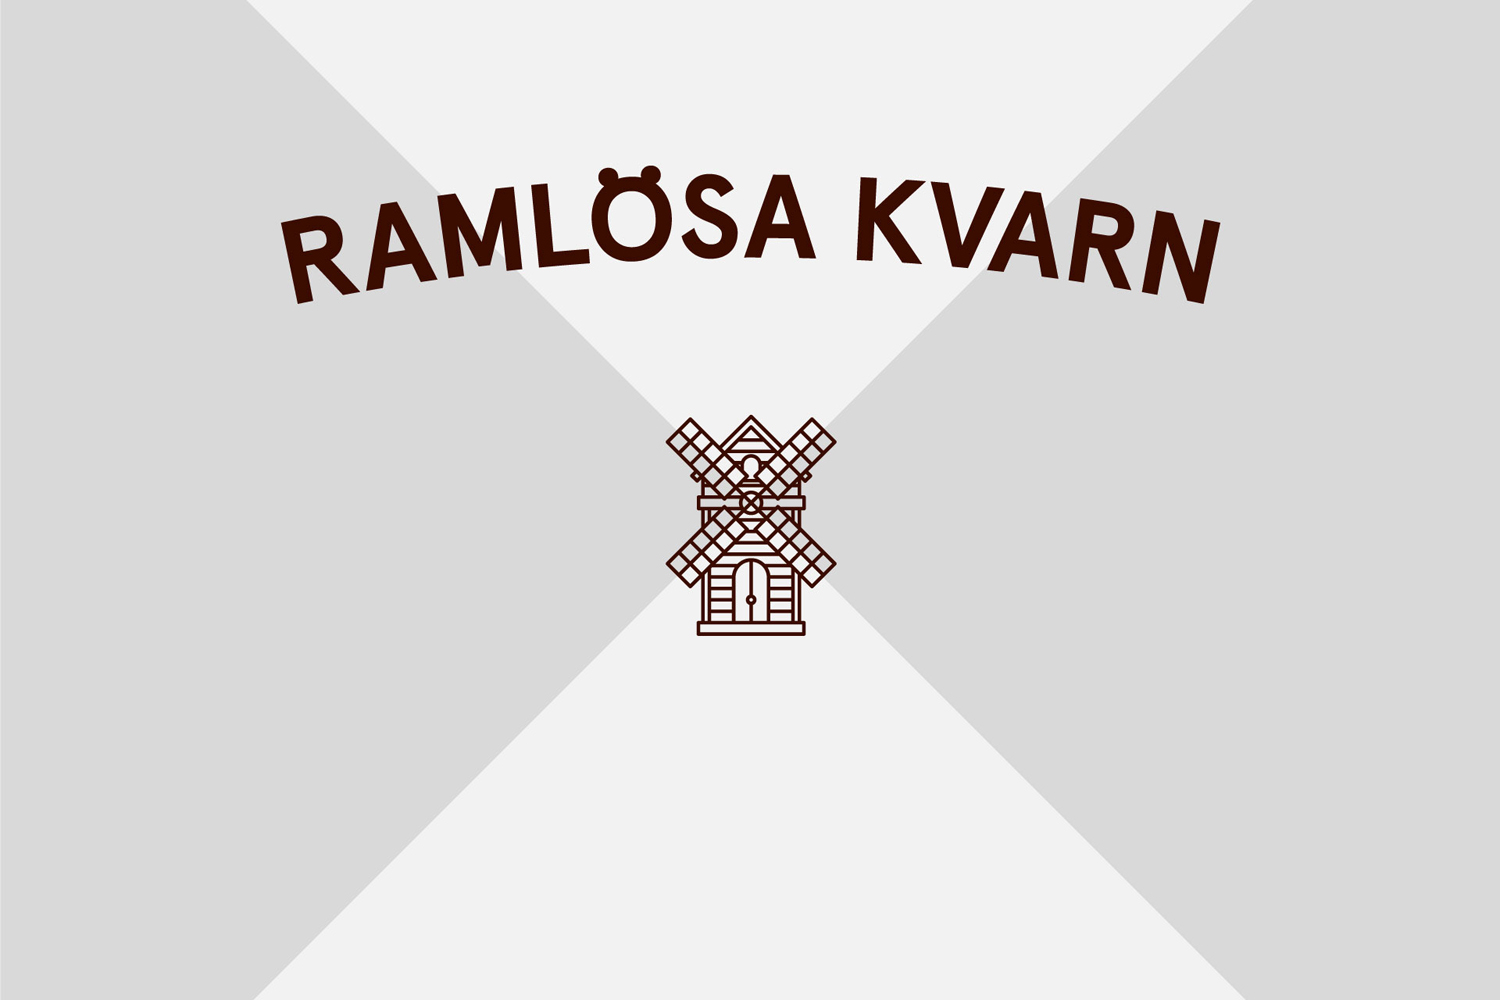 Logo for Swedish flour business Ramlösa Kvarn by Amore.